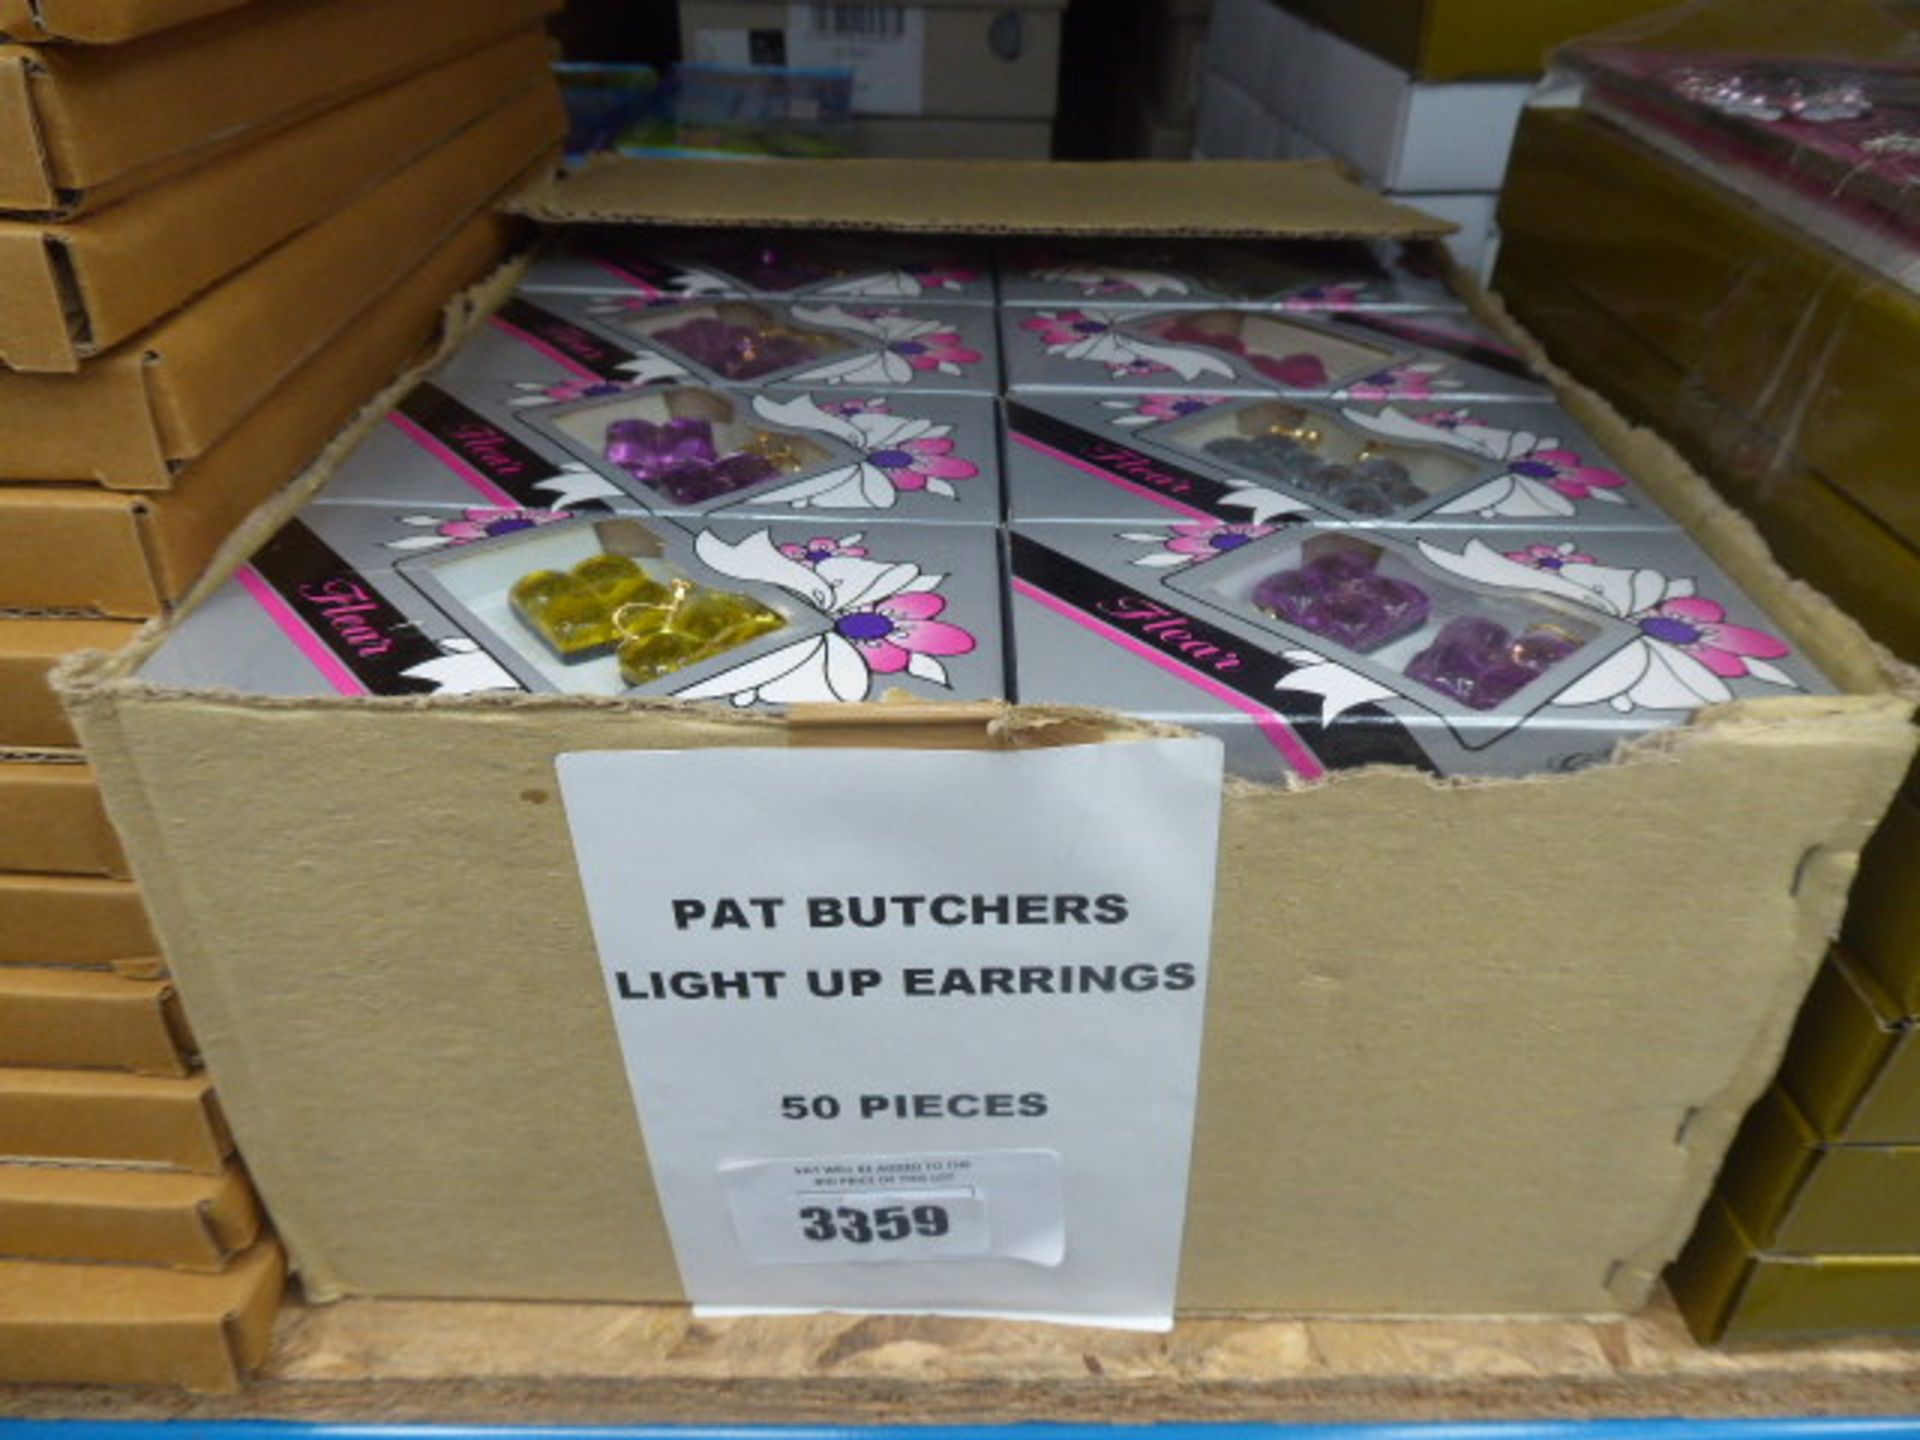 Quantity of Pat Butcher light up earrings